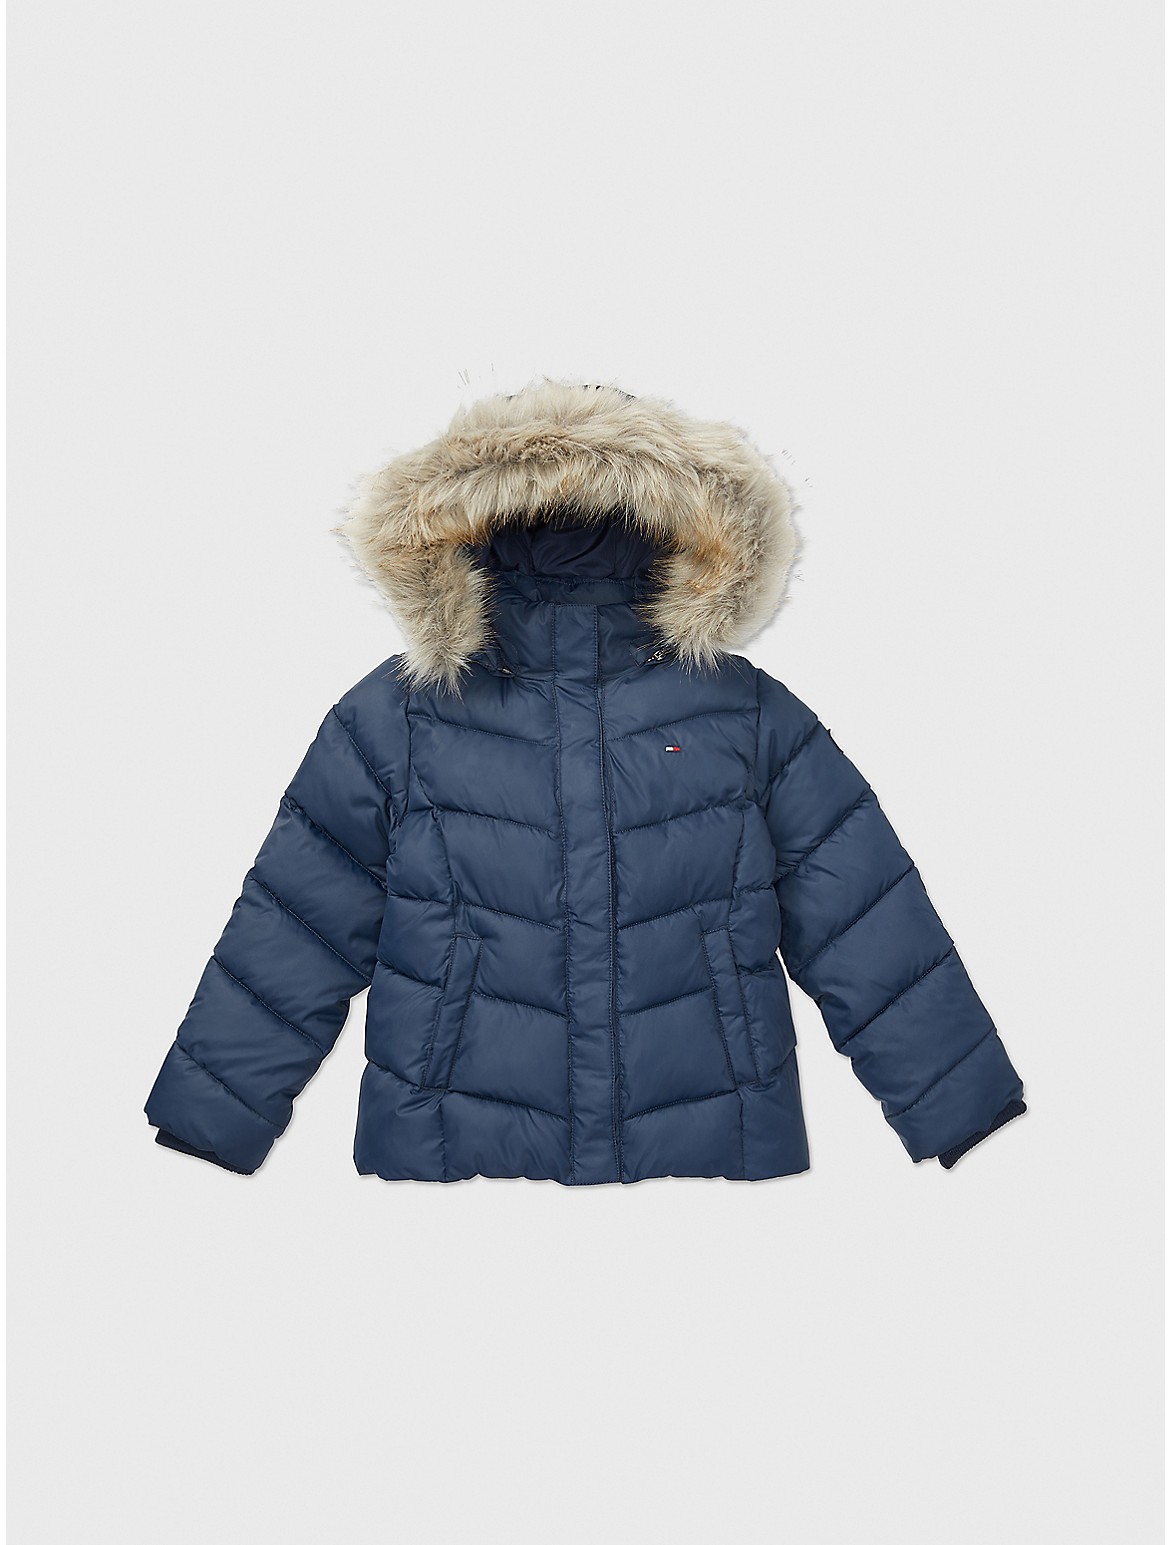 Tommy Hilfiger Girls' Kids' Faux Fur Hooded Jacket